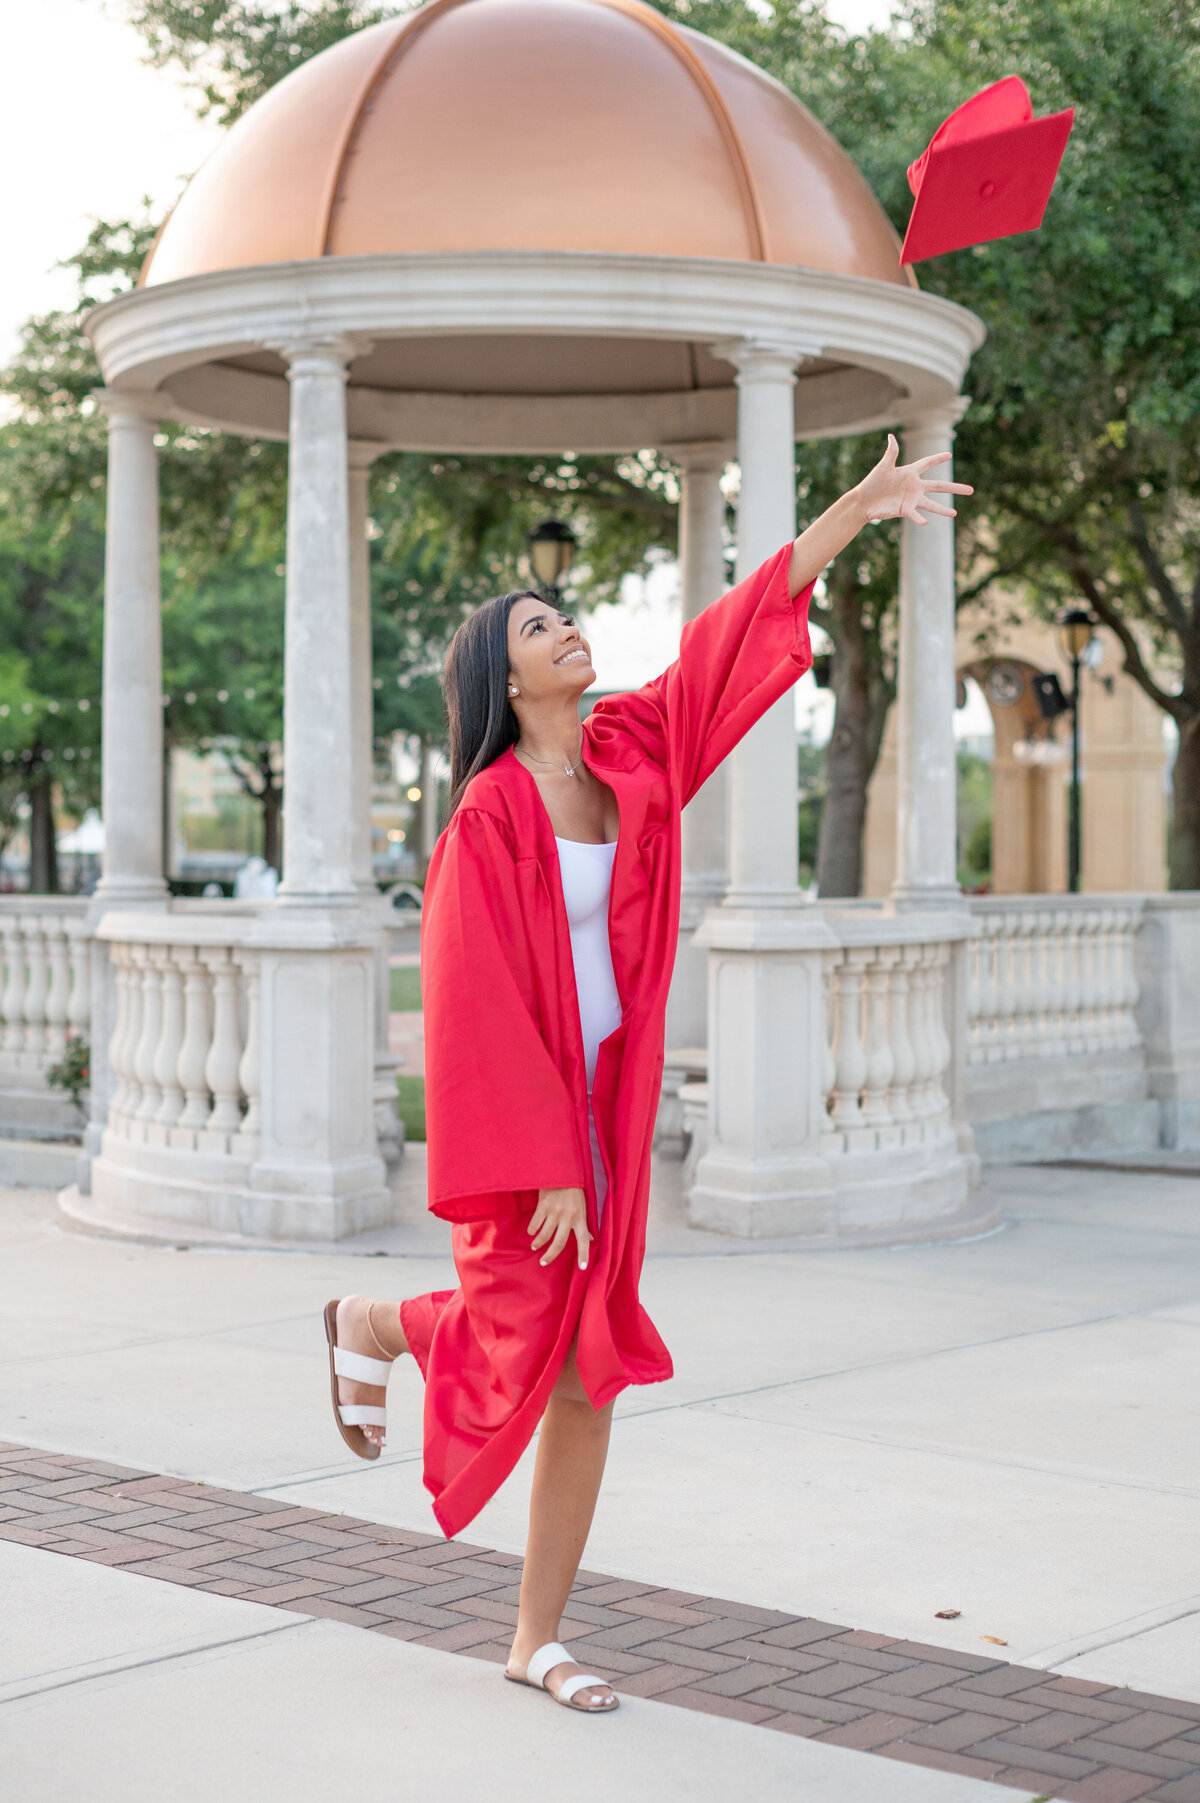 High school senior girl in graduation gown throws cap into the air.